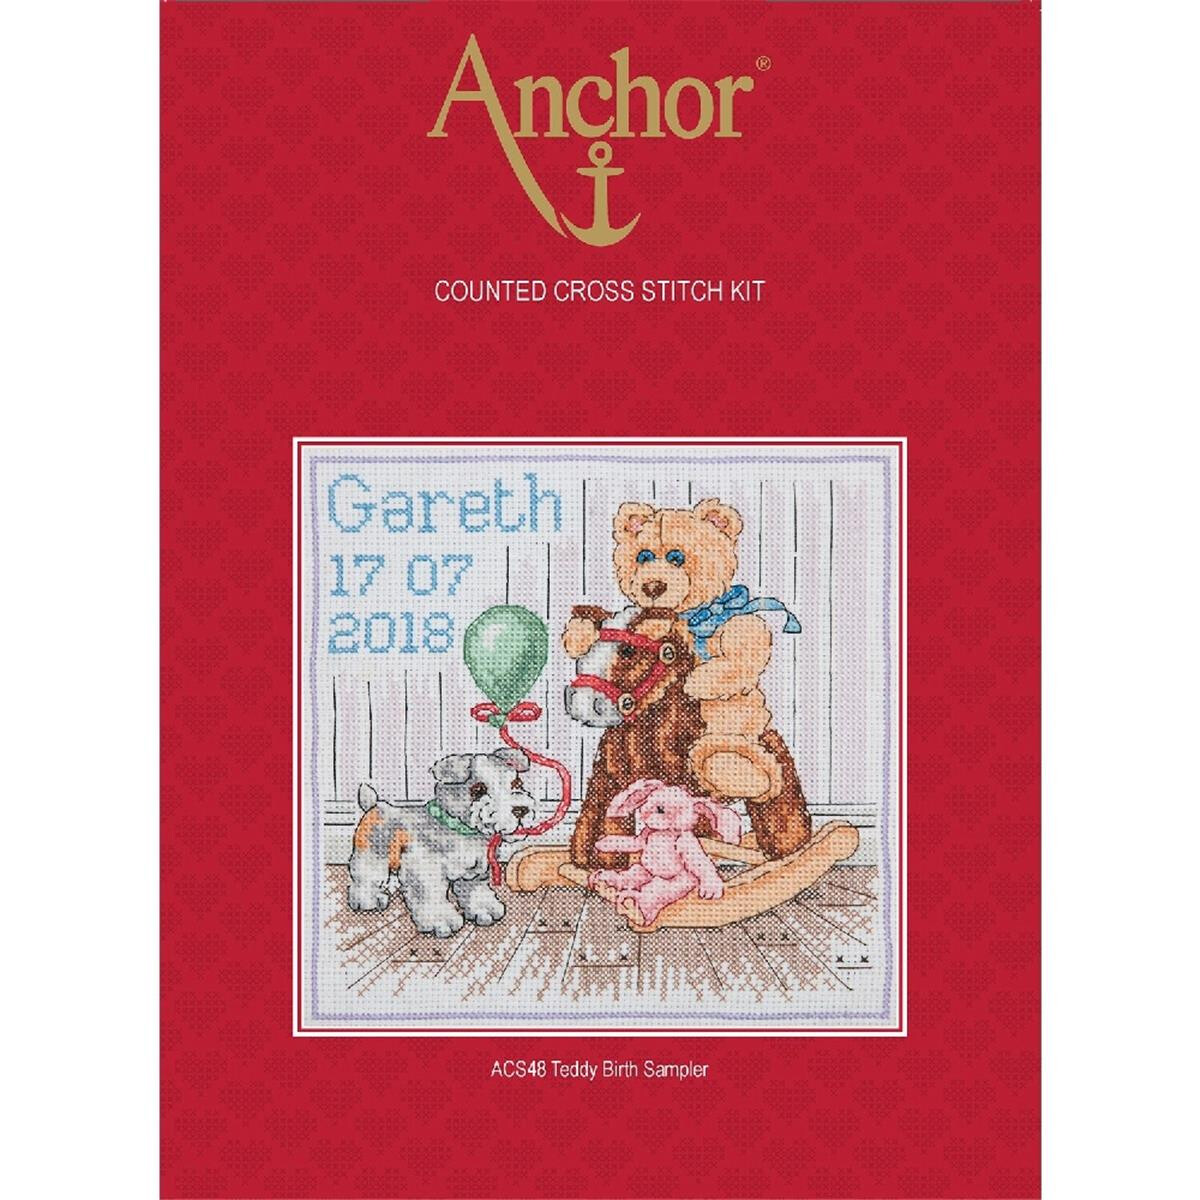 Anchor counted Cross Stitch kit "Teddy Birth...